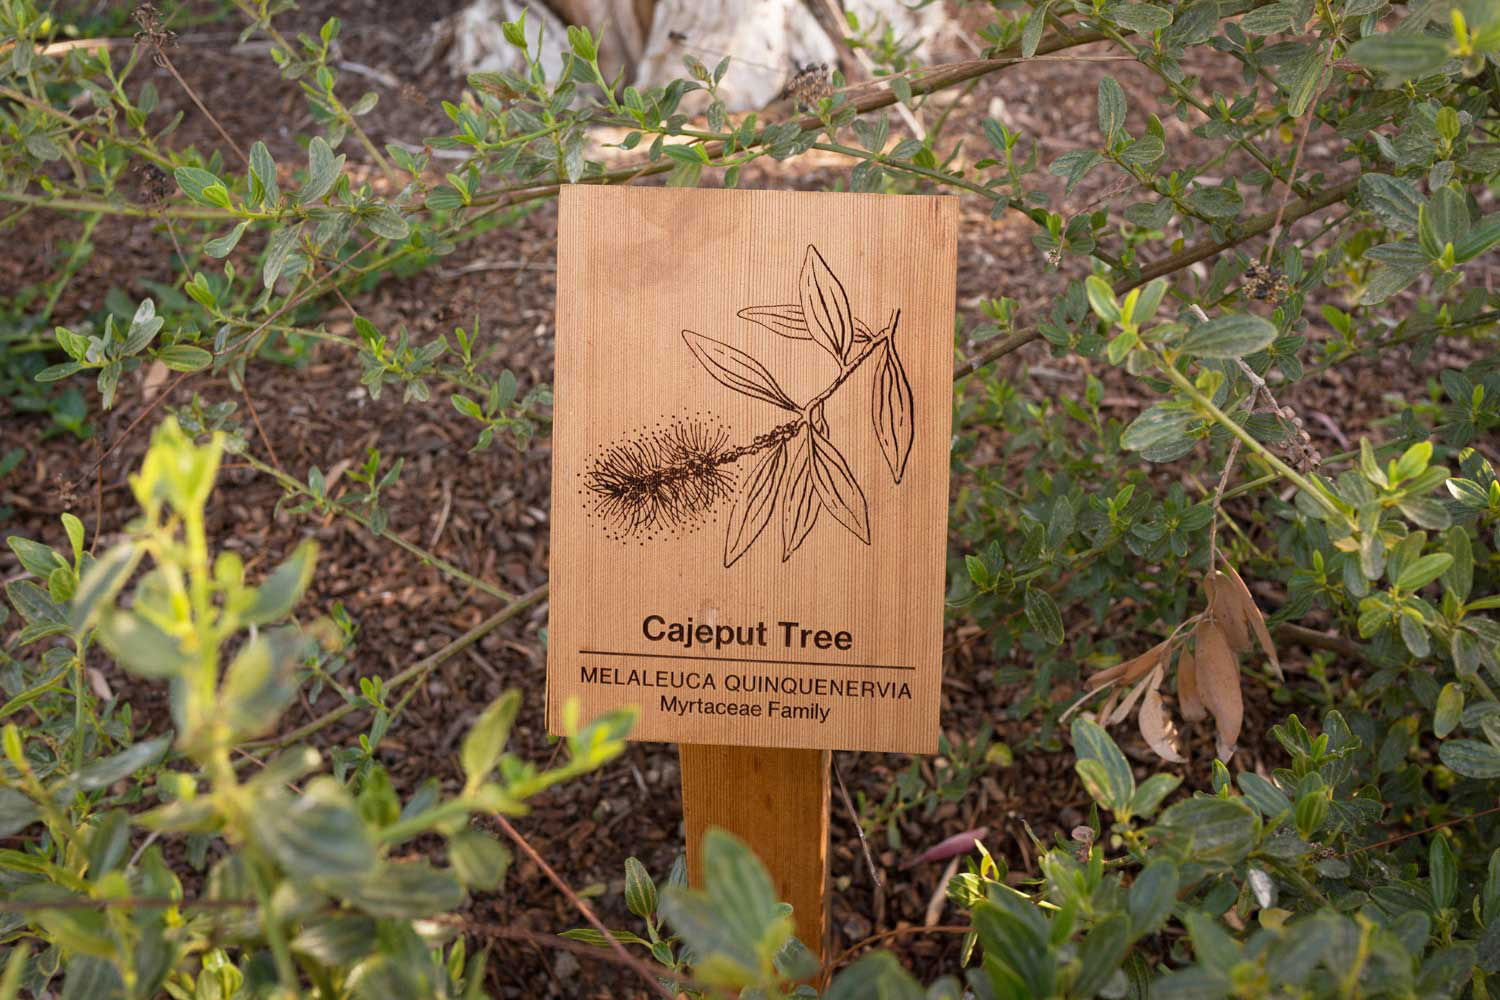 botanical-illustration-identification-signage--Cajeput-Tree-Melaleuca-quinquenervia-Facebook-HQ-by-Erin-Ellis.jpg